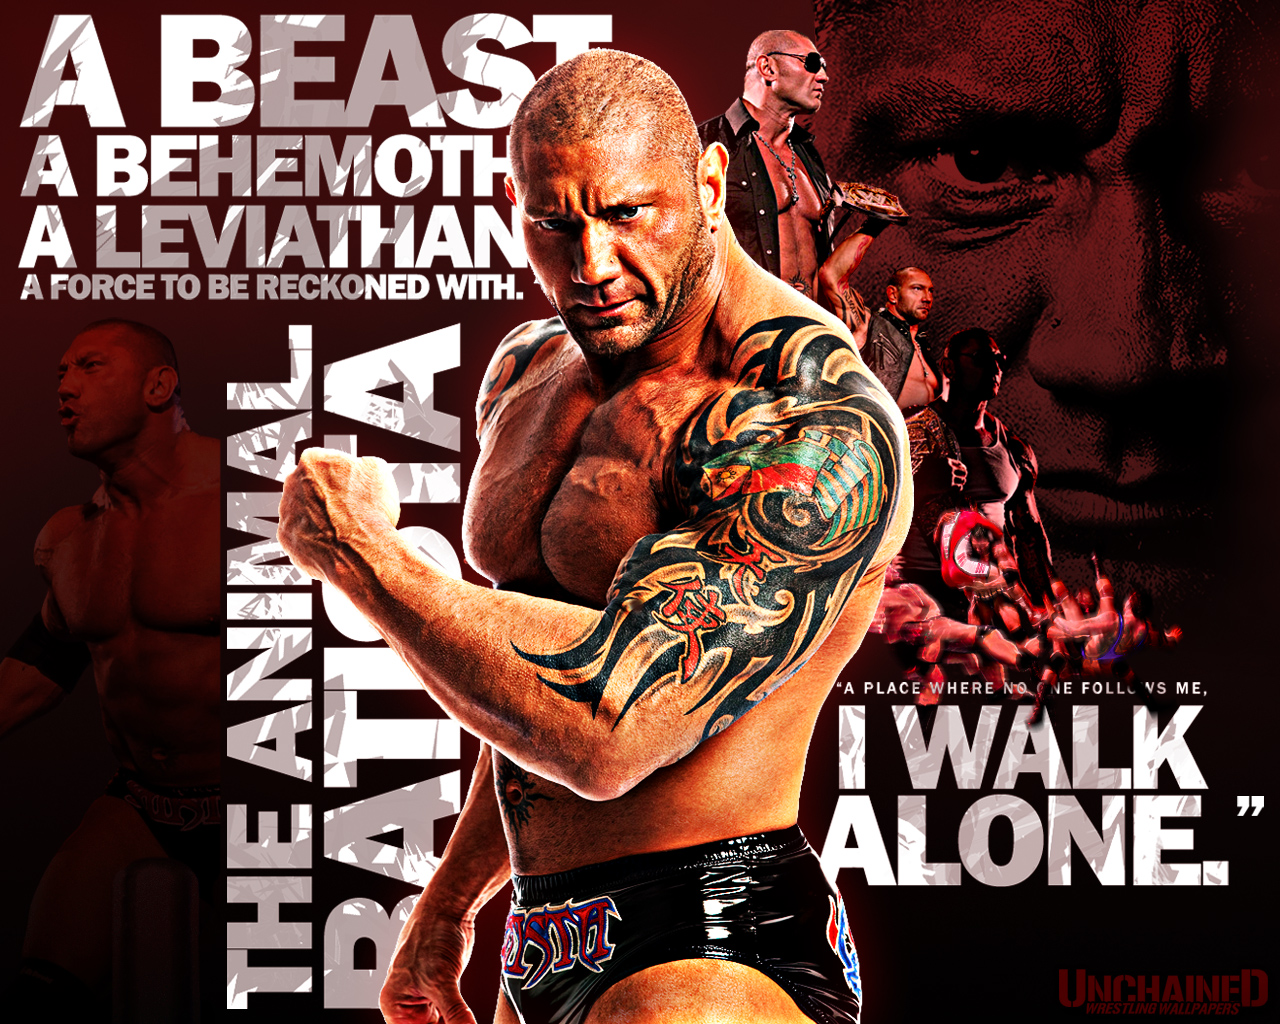 Download High quality A Beast Wrestling WWE wallpaper / 1280x1024